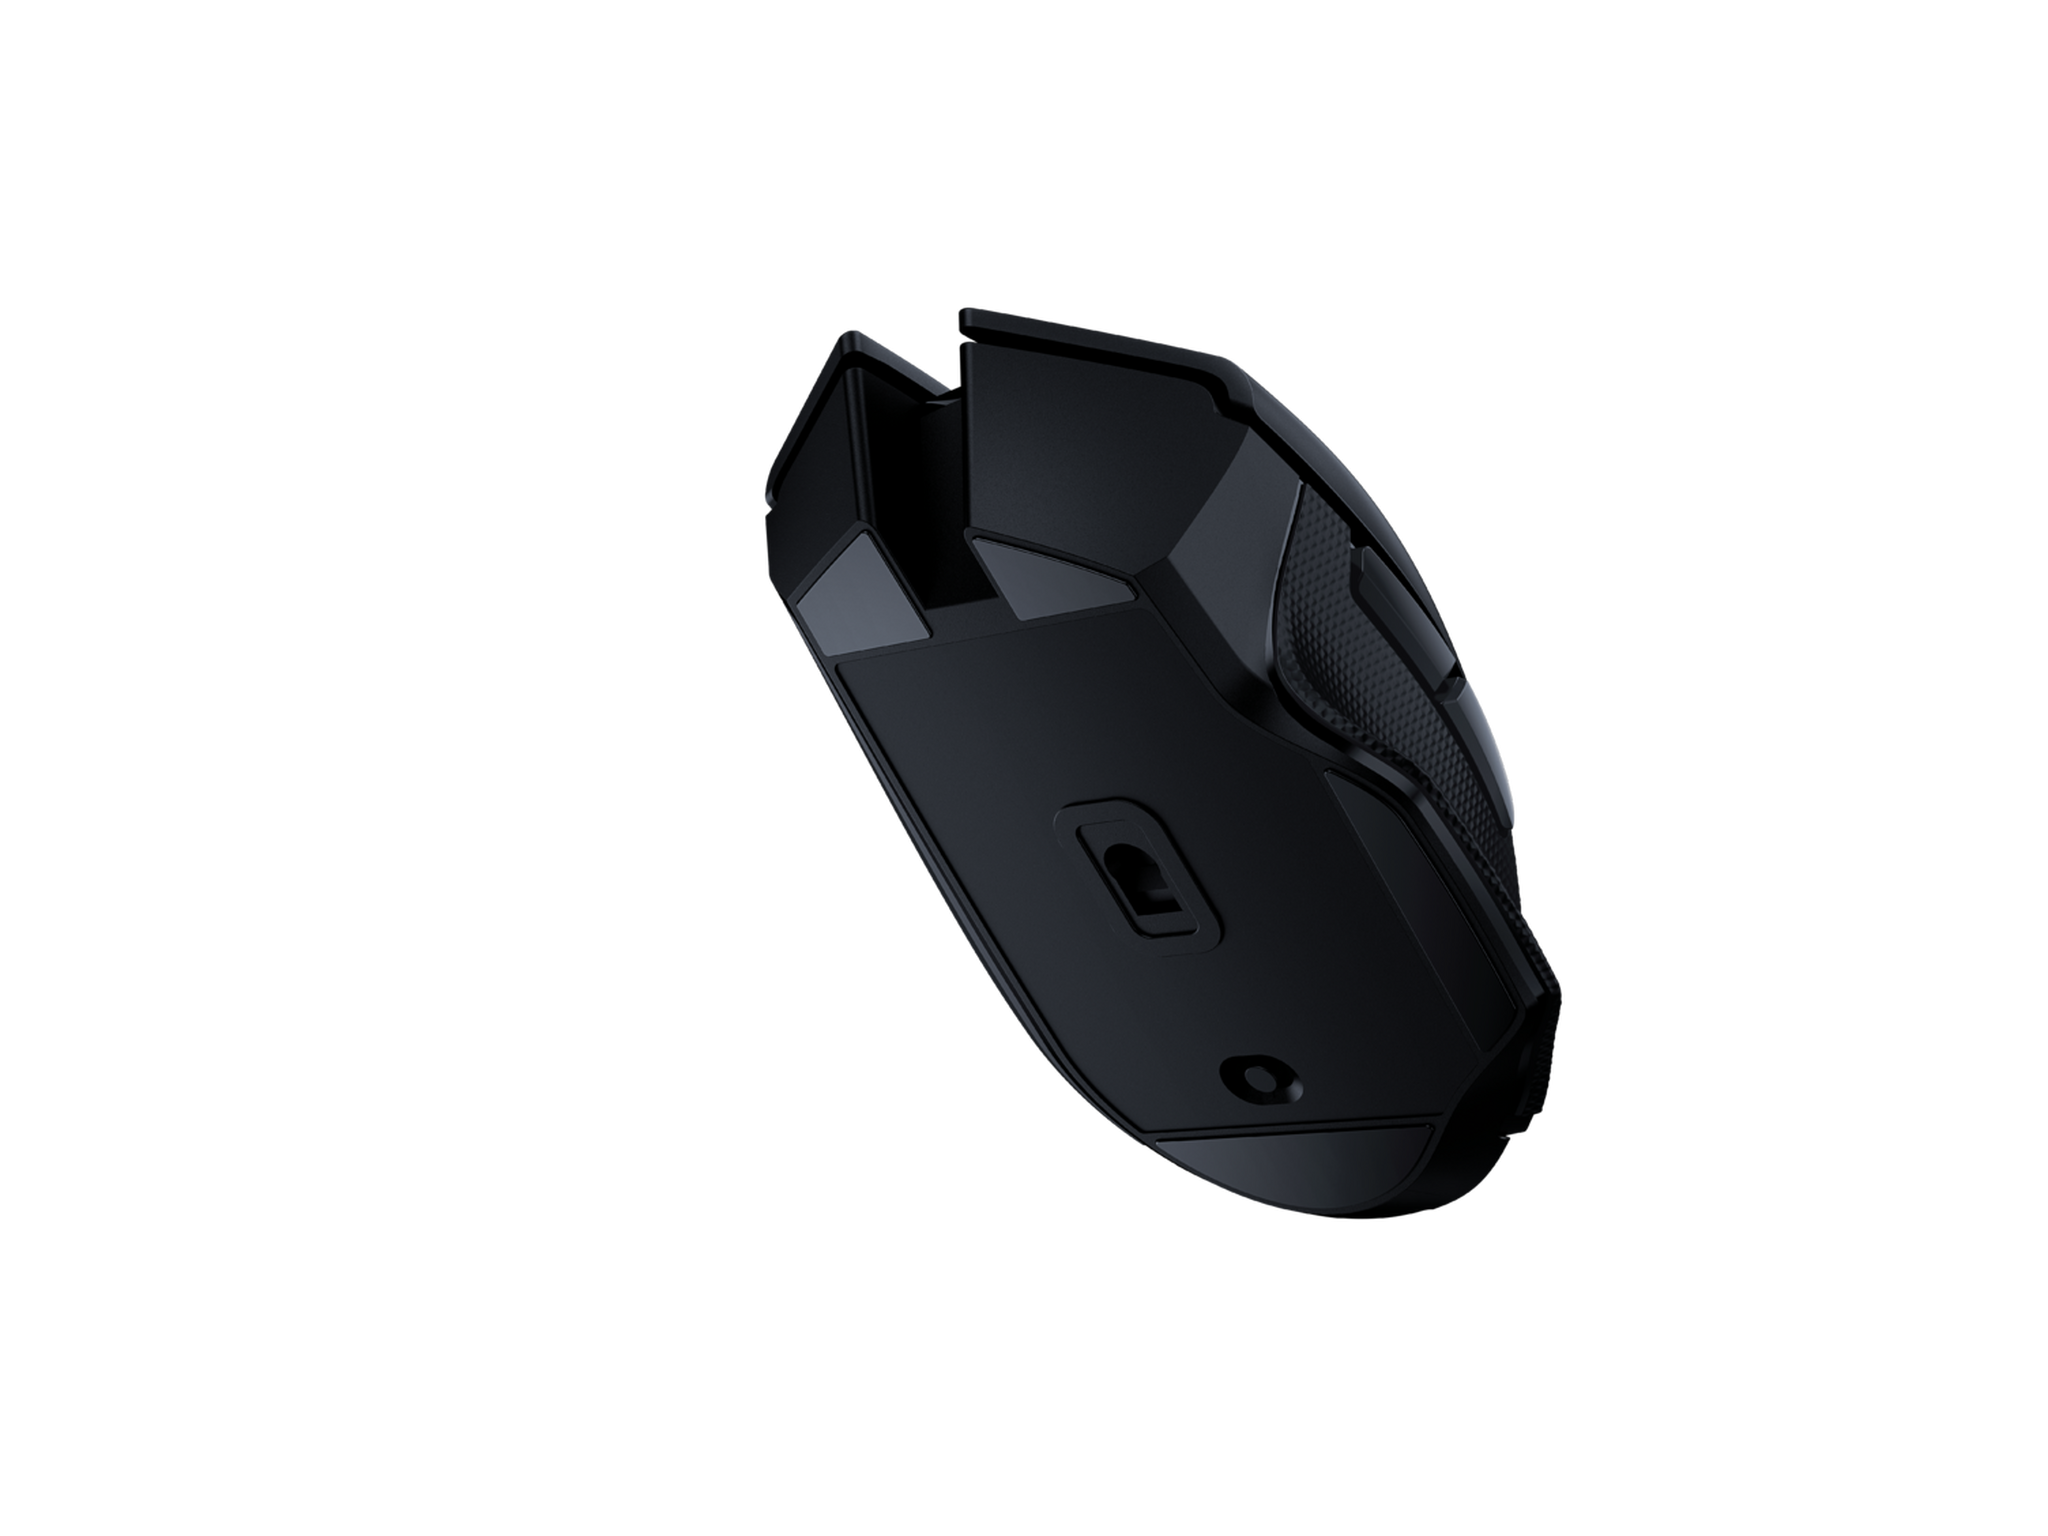 Razer Basilisk X HyperSpeed Wireless Gaming Mouse - Black